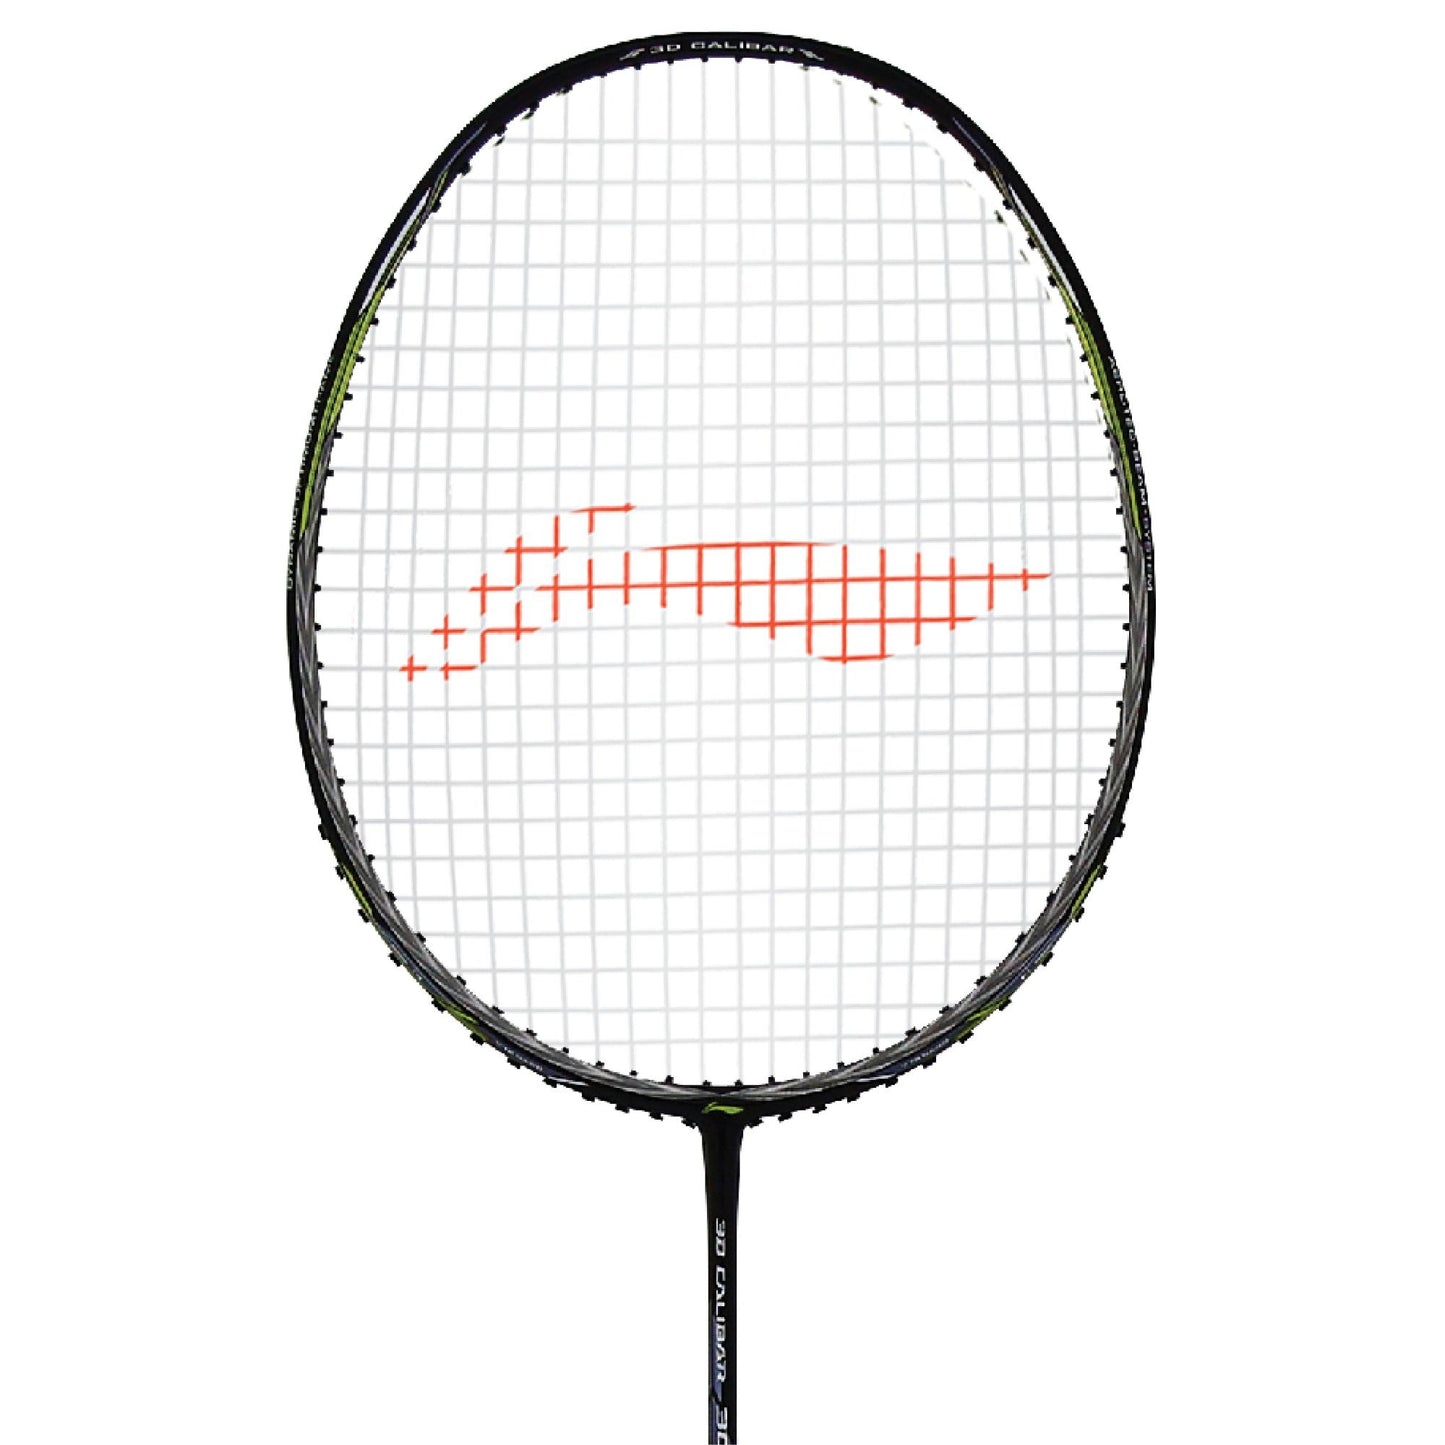 Li-Ning 3D Calibar 300 Instinct (Black/Gold) Badminton Racket